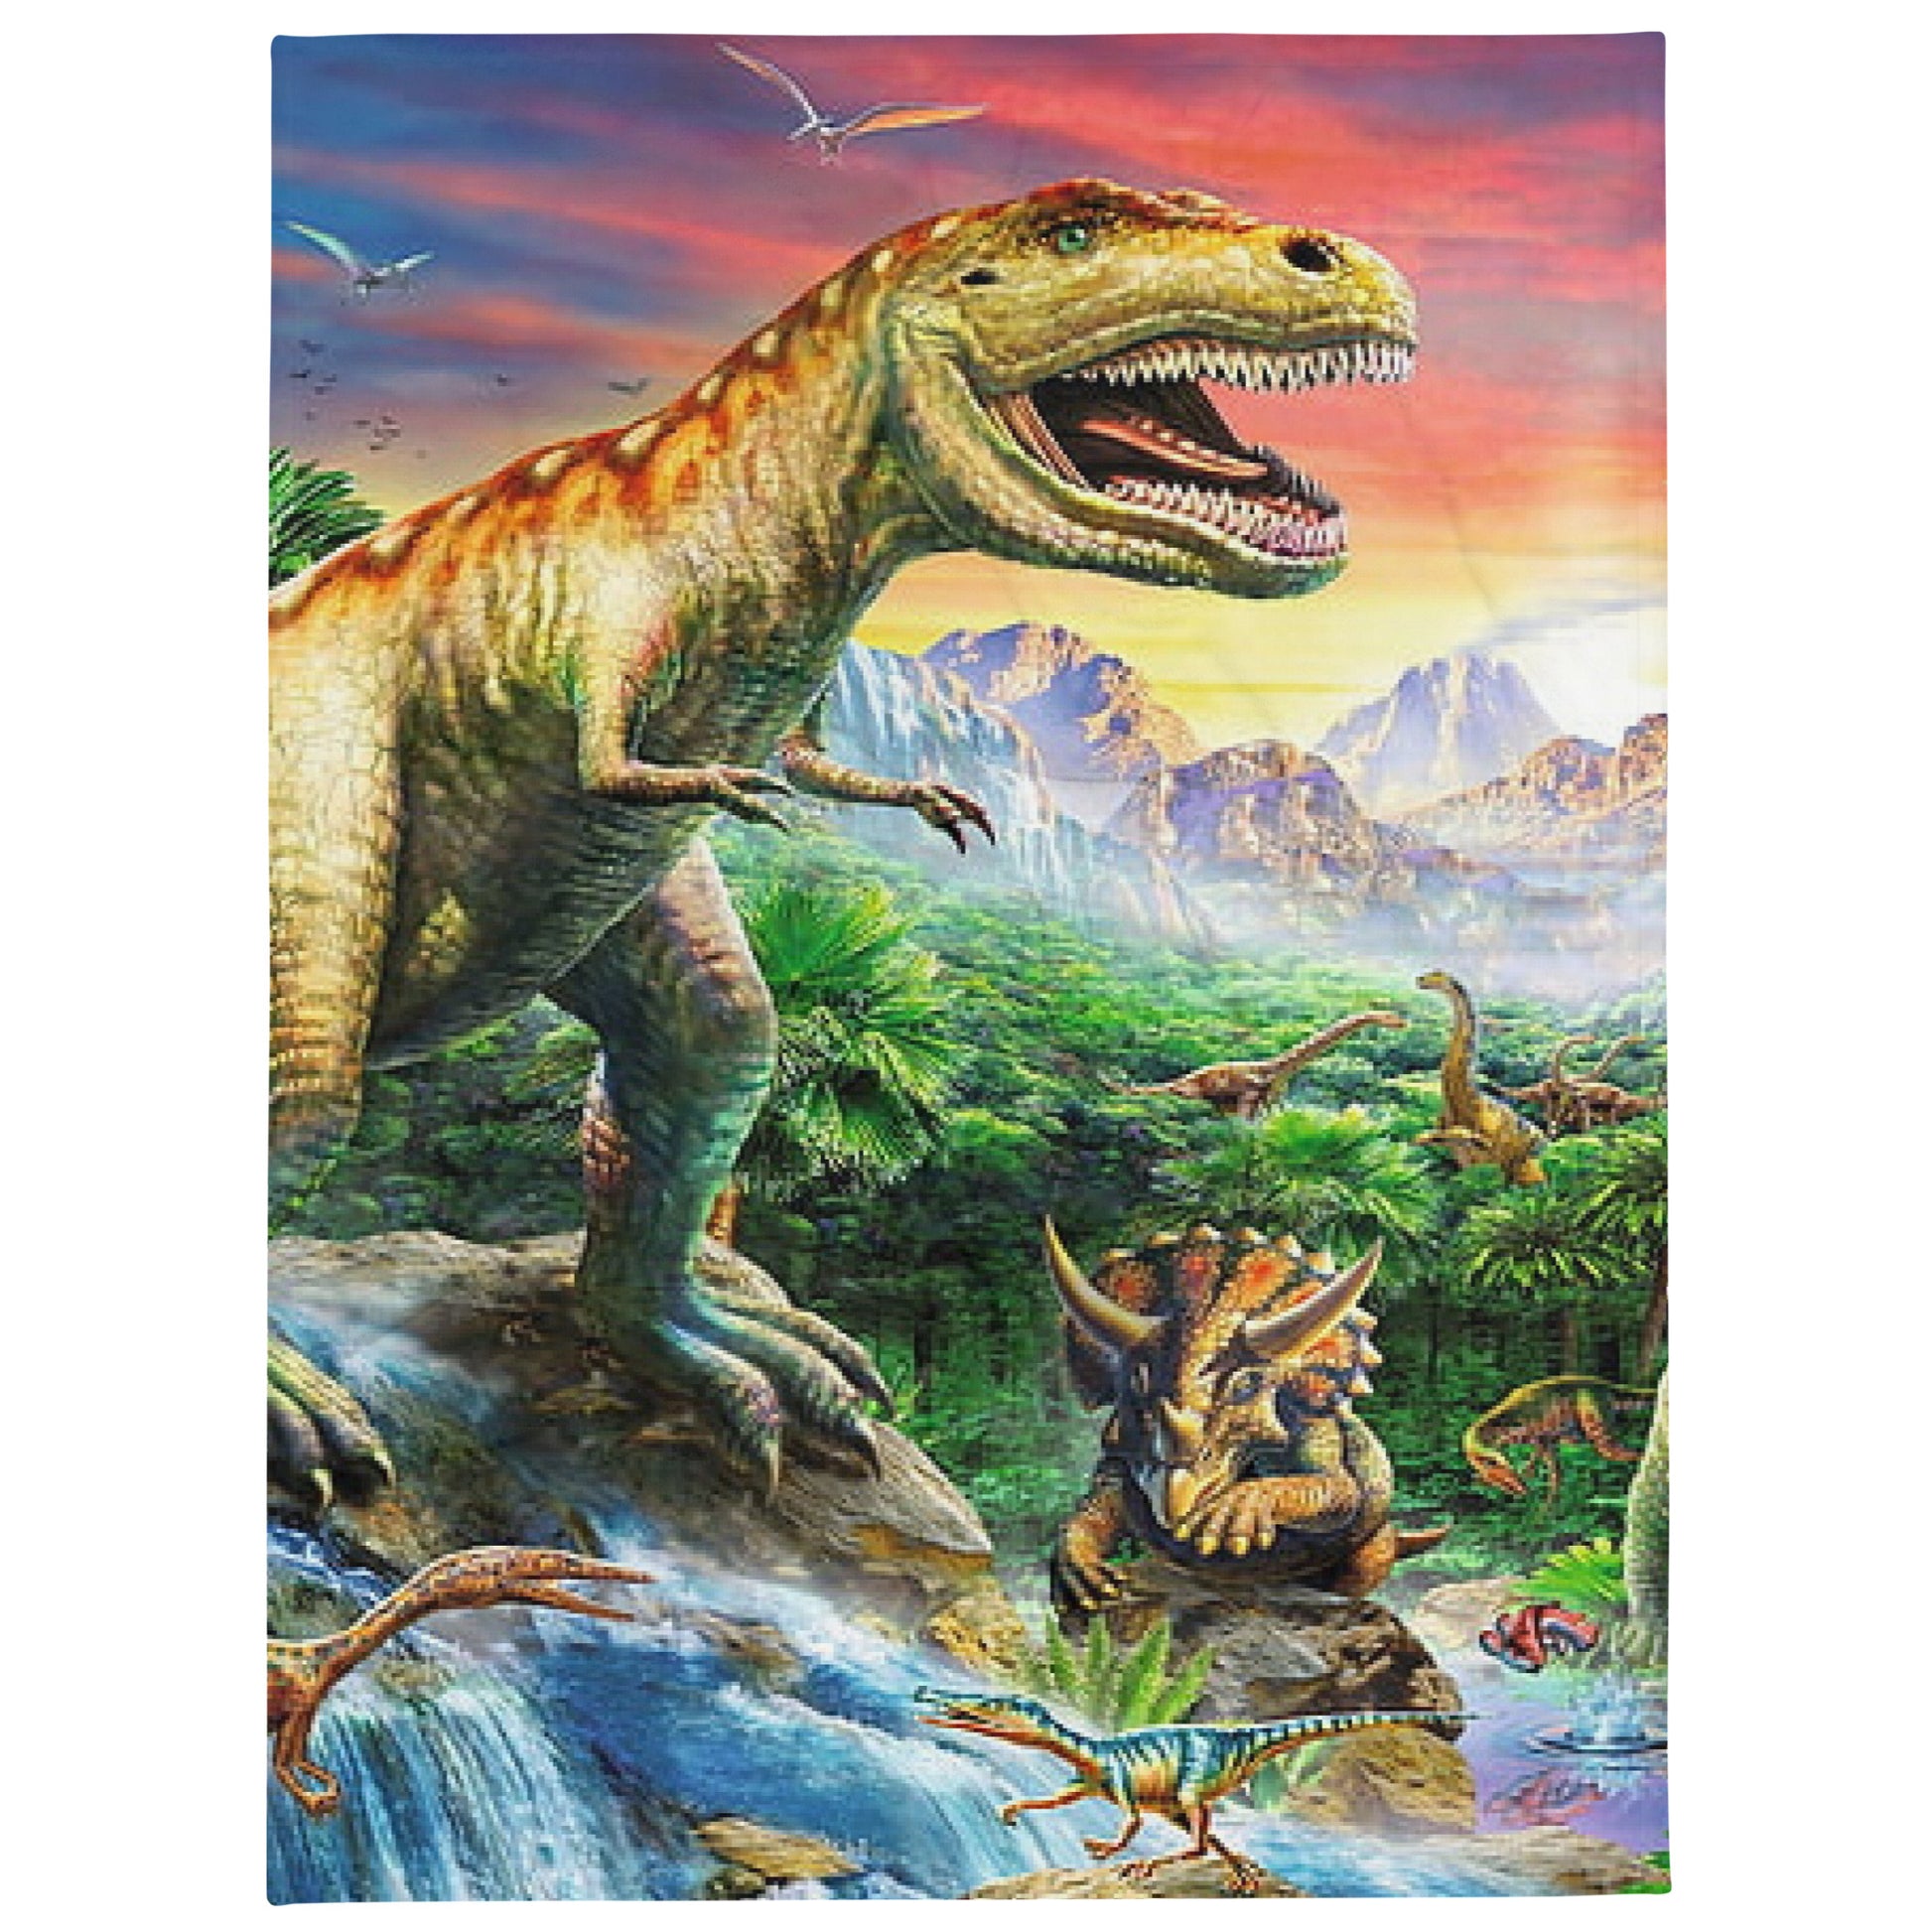 Dinosaurs Among Us Throw Blanket CedarHill Country Market